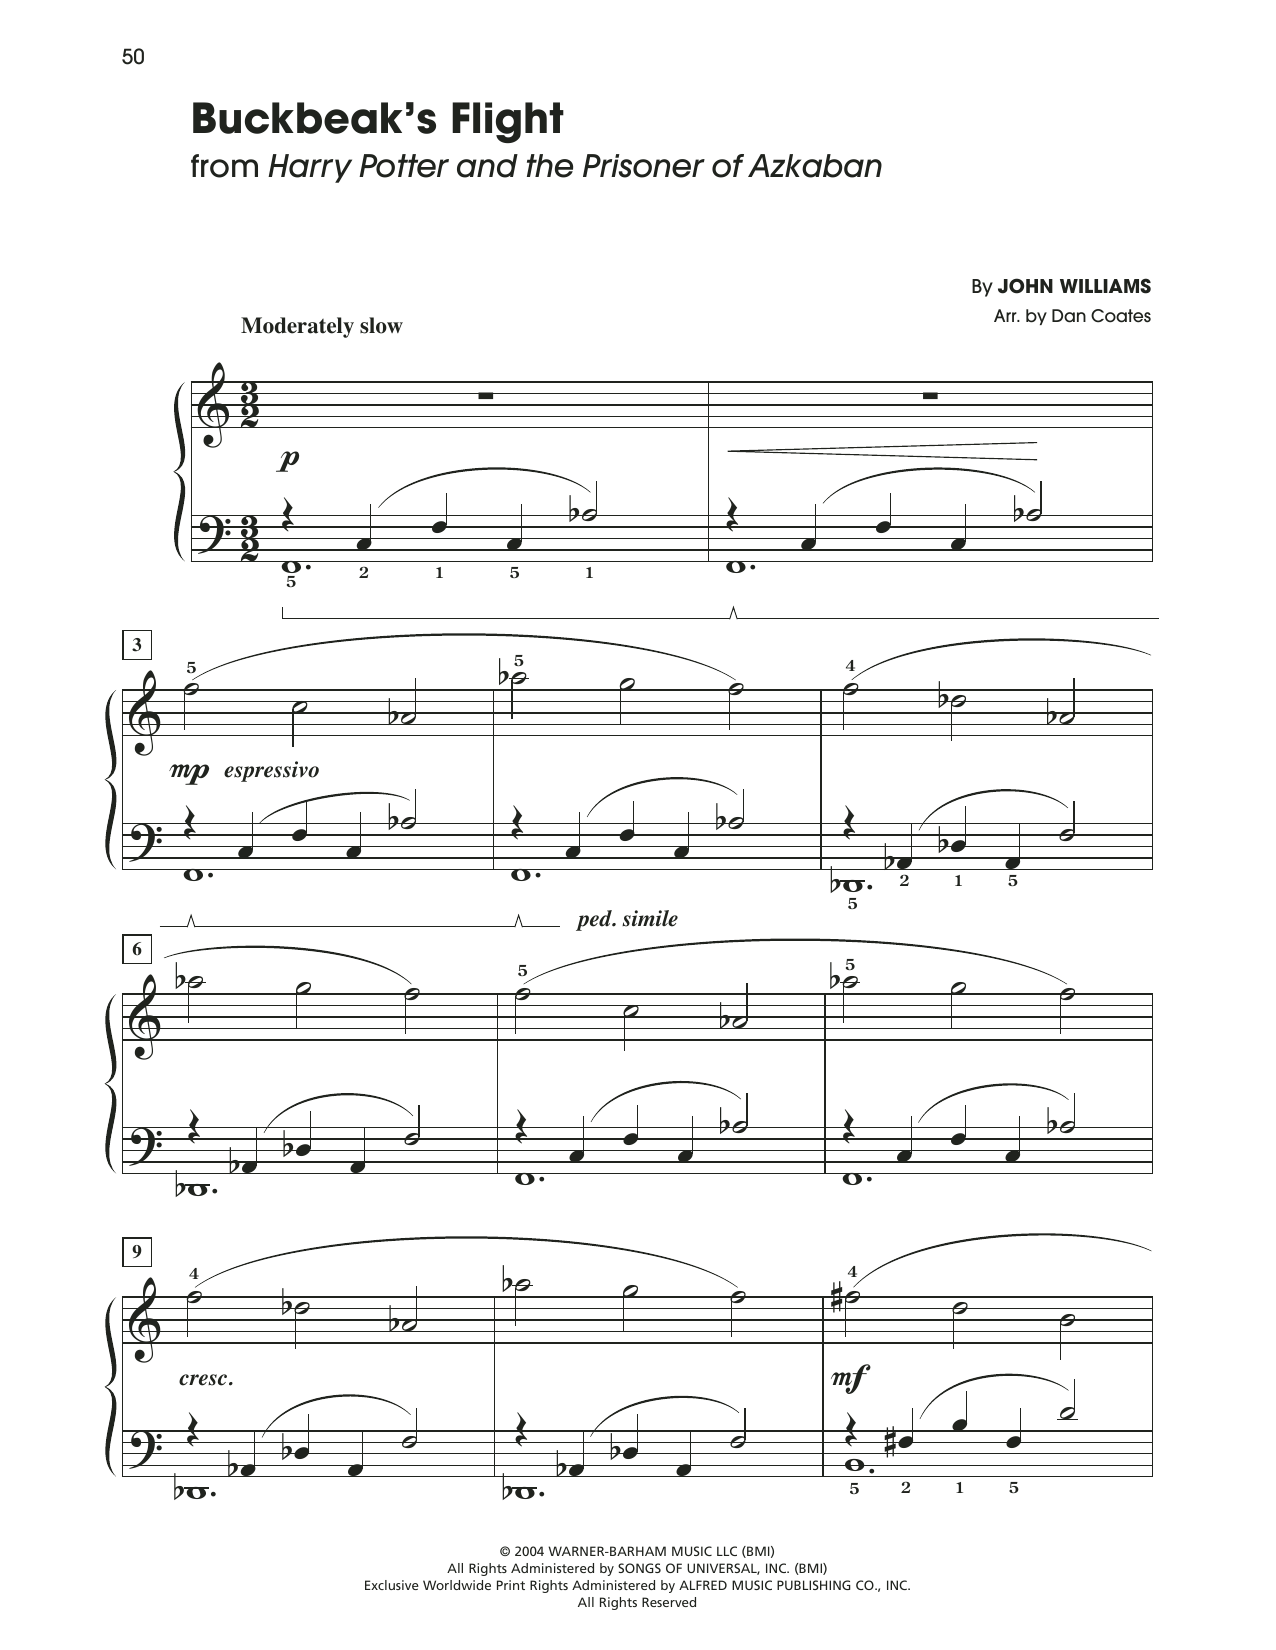 John Williams Buckbeak's Flight (from Harry Potter) (arr. Dan Coates) Sheet Music Notes & Chords for Easy Piano - Download or Print PDF